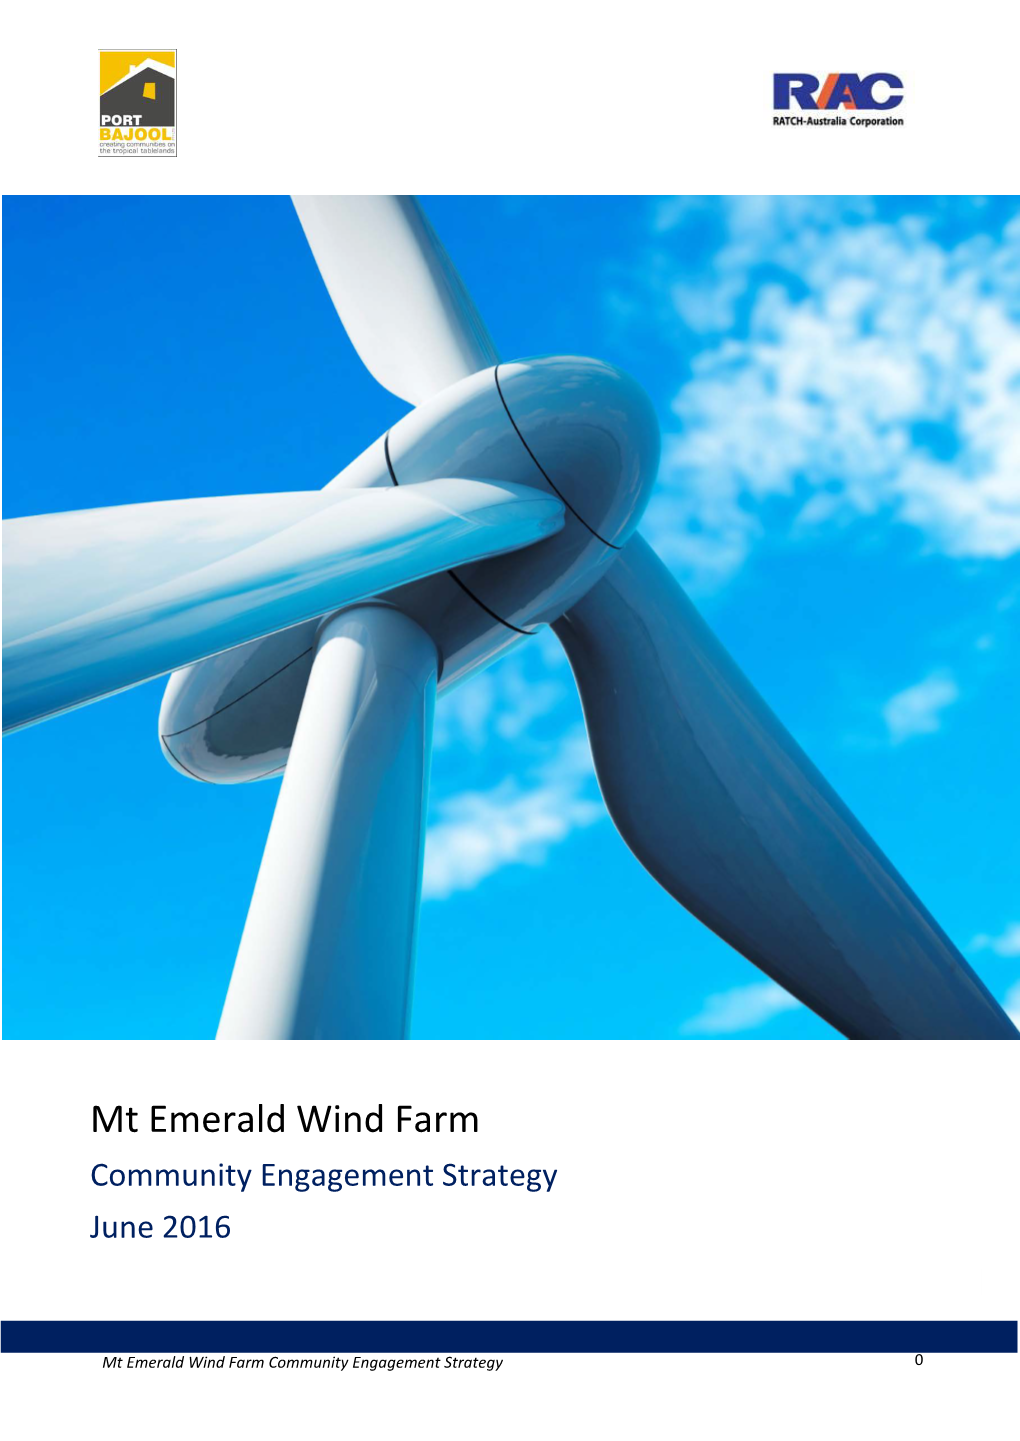 Mt Emerald Wind Farm Community Engagement Strategy June 2016